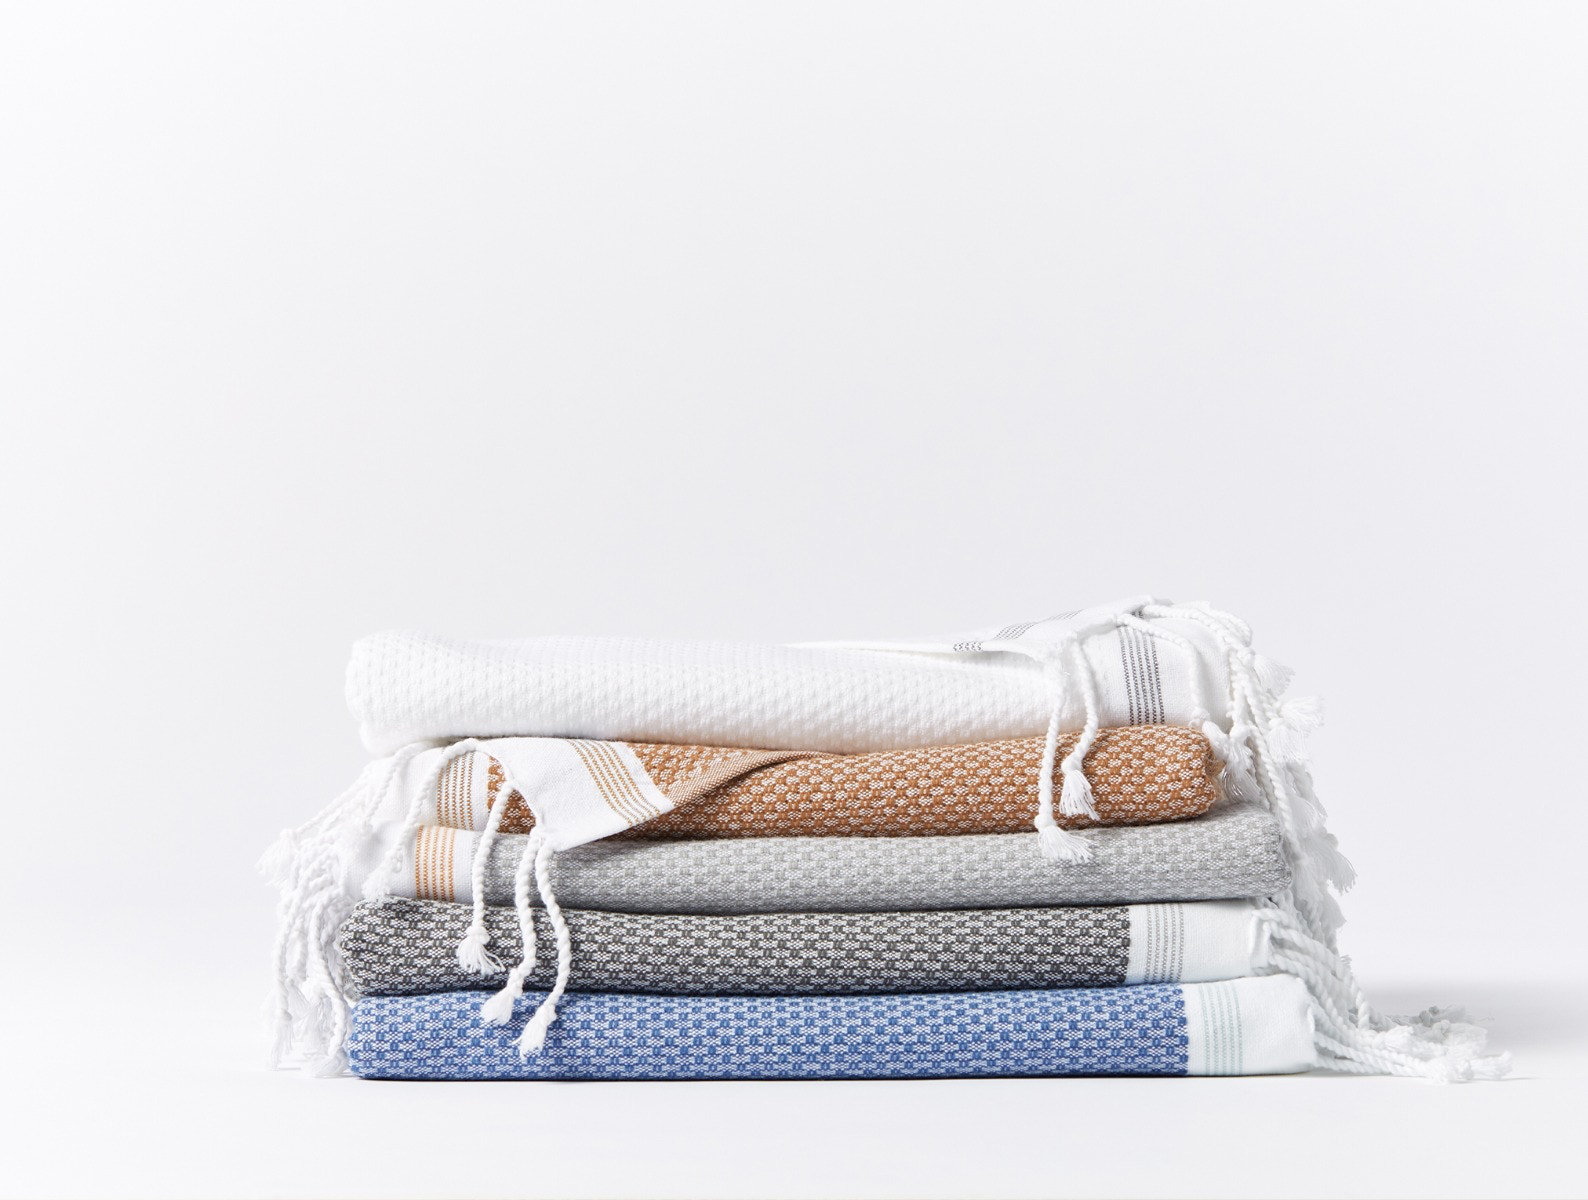 Brooks Organic Cotton White Bath Towel Set + Reviews